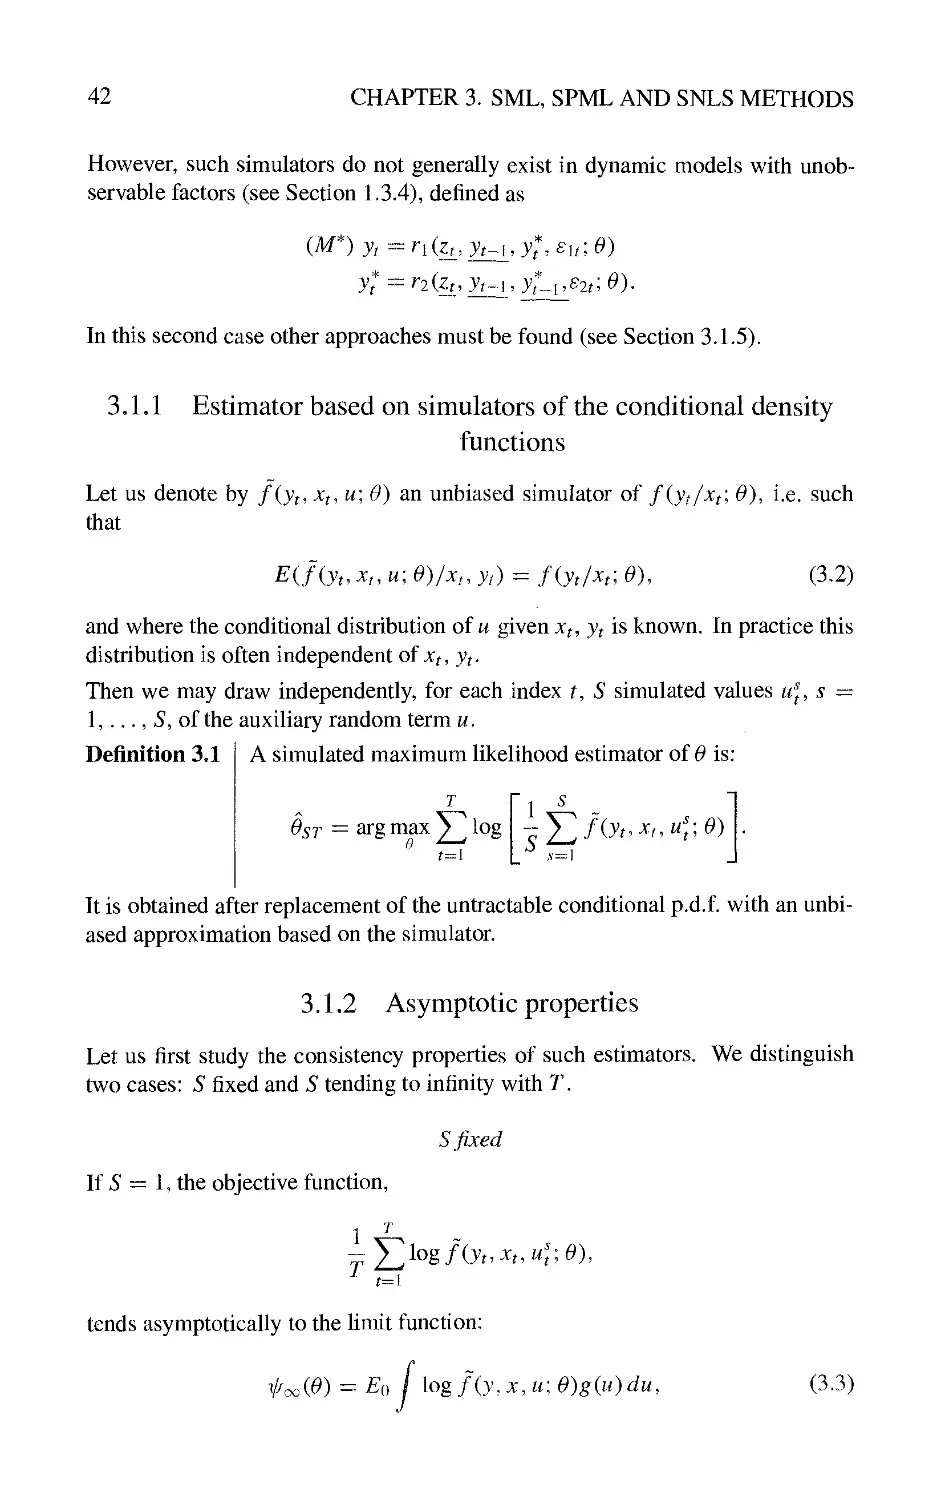 3.1.1 Estimator based on simulators of the conditional density functions
3.1.2 Asymptotic properties